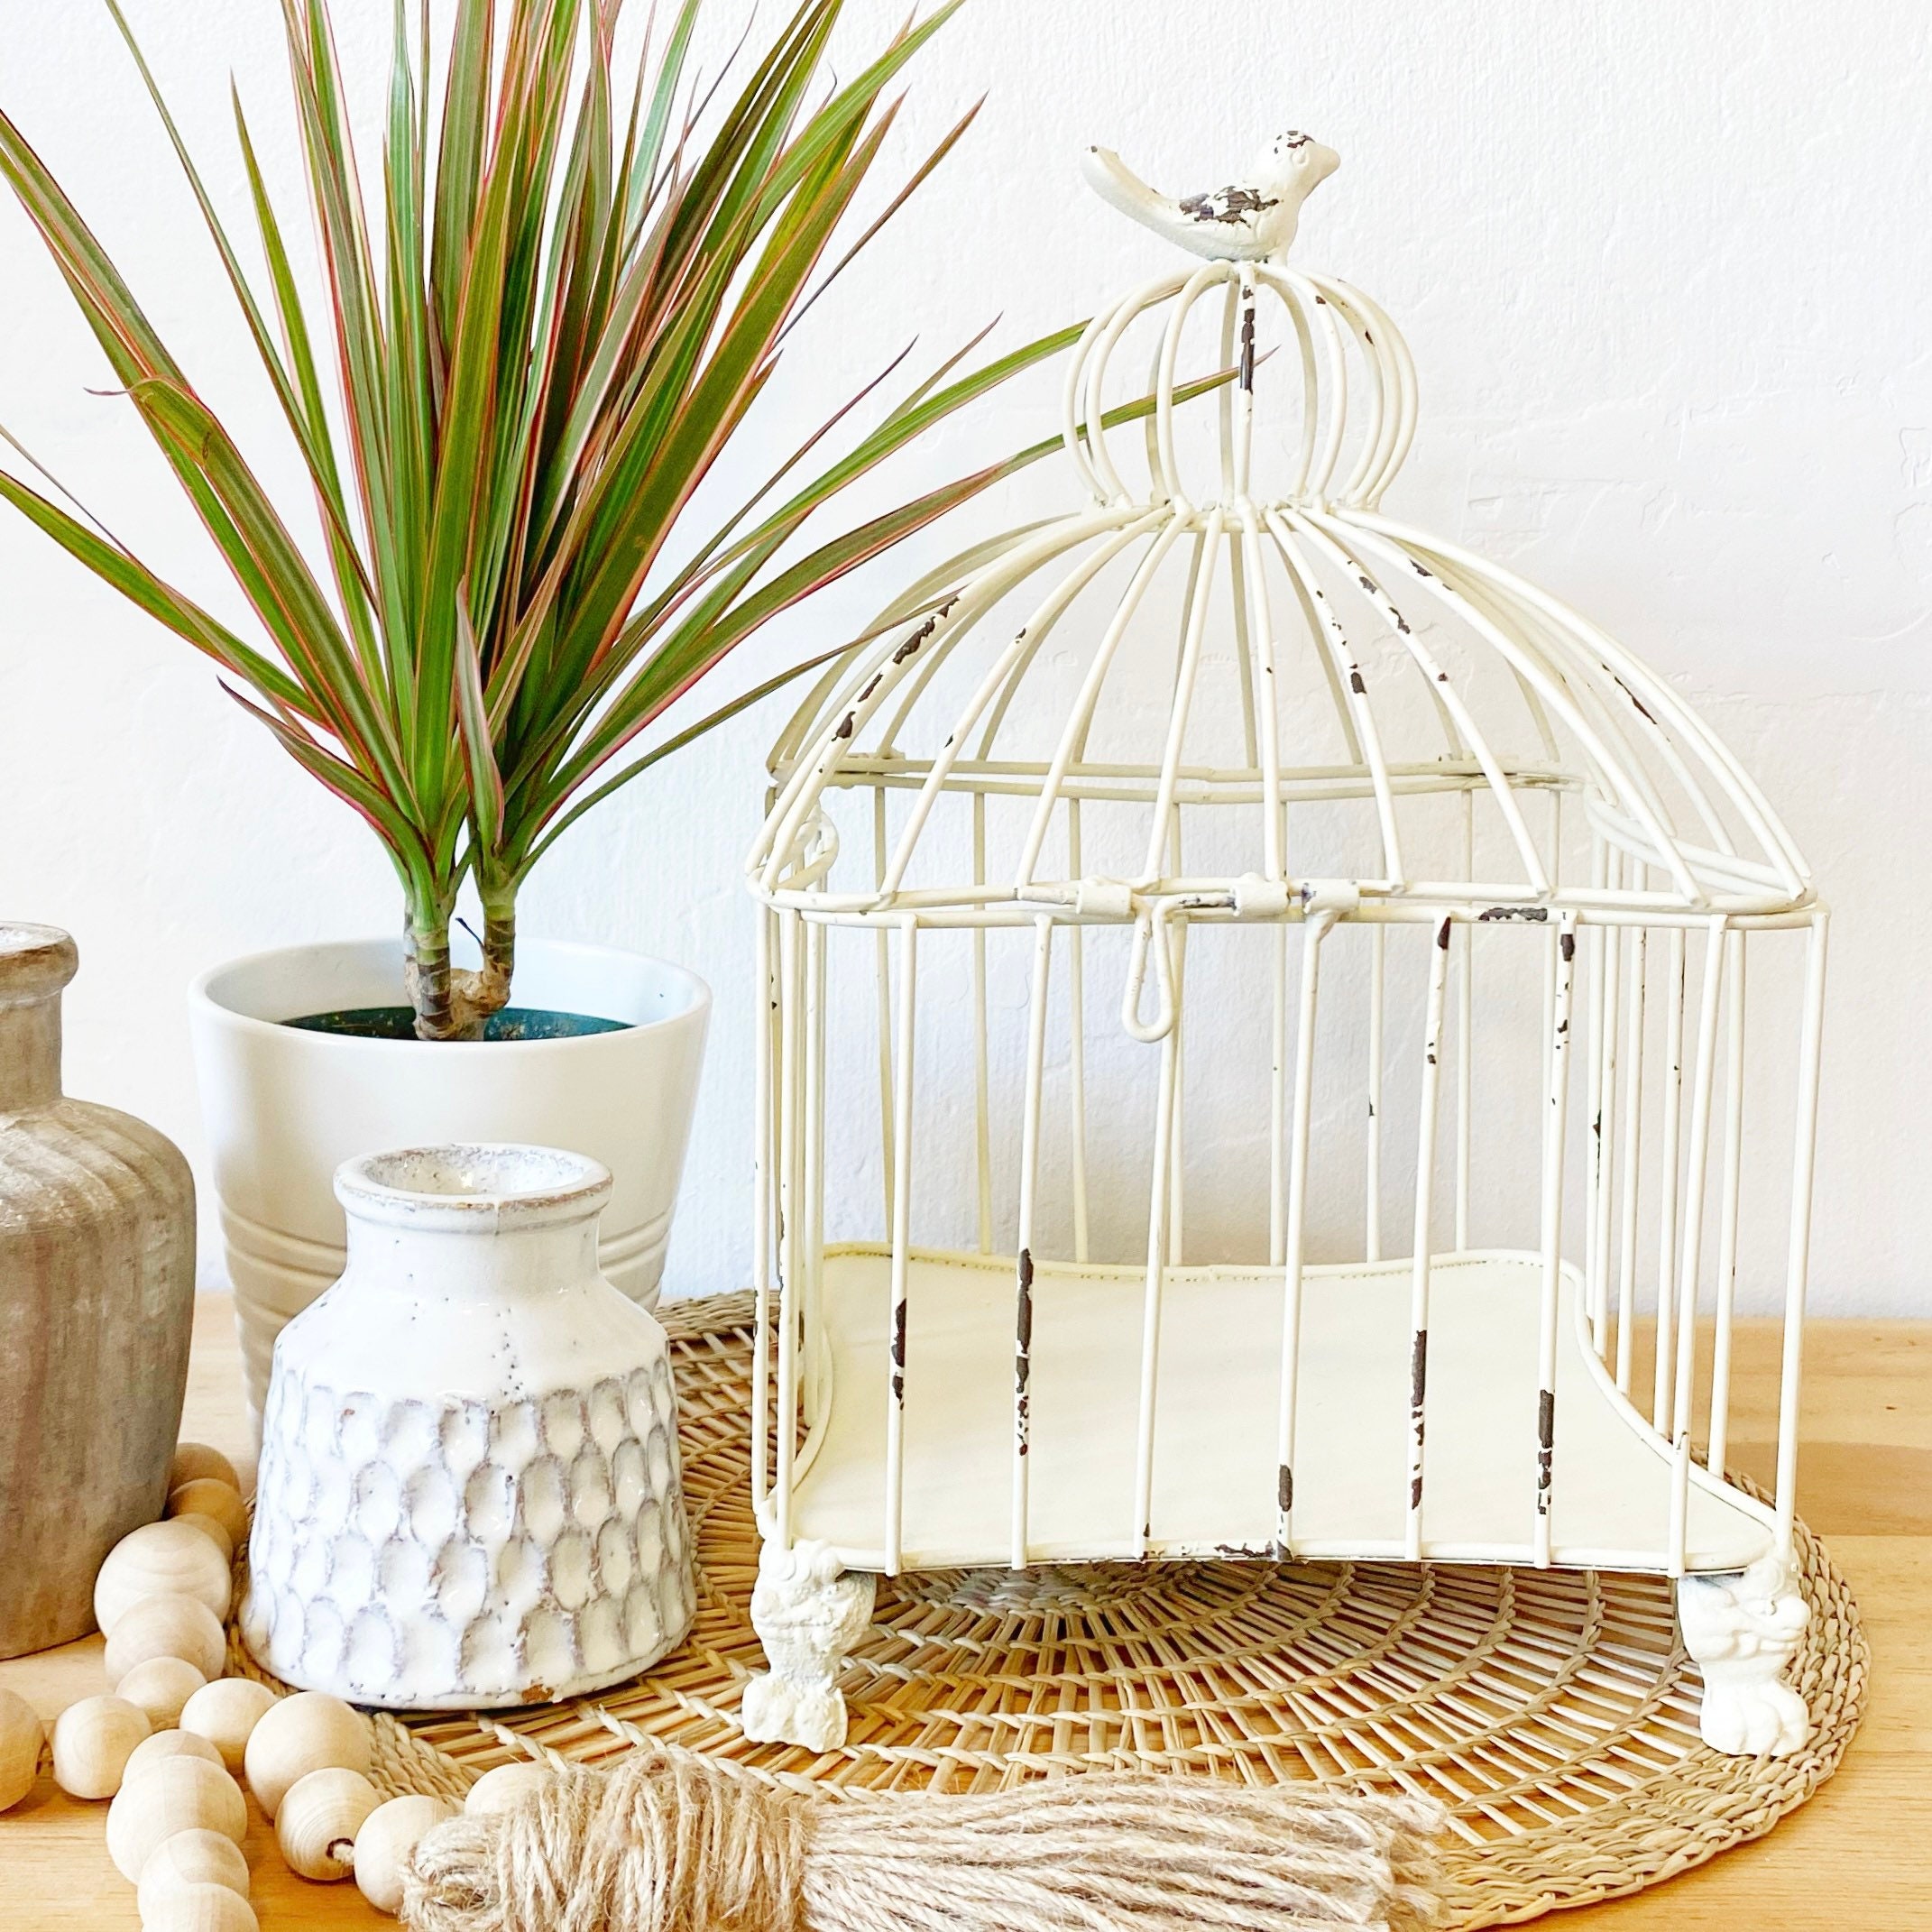 Wedding Bird Cage , Metal Table Centerpiece , French Birdcage , Rustic  Wedding Decor Metal Birdcage , Decorative Birdcage Card Holder 